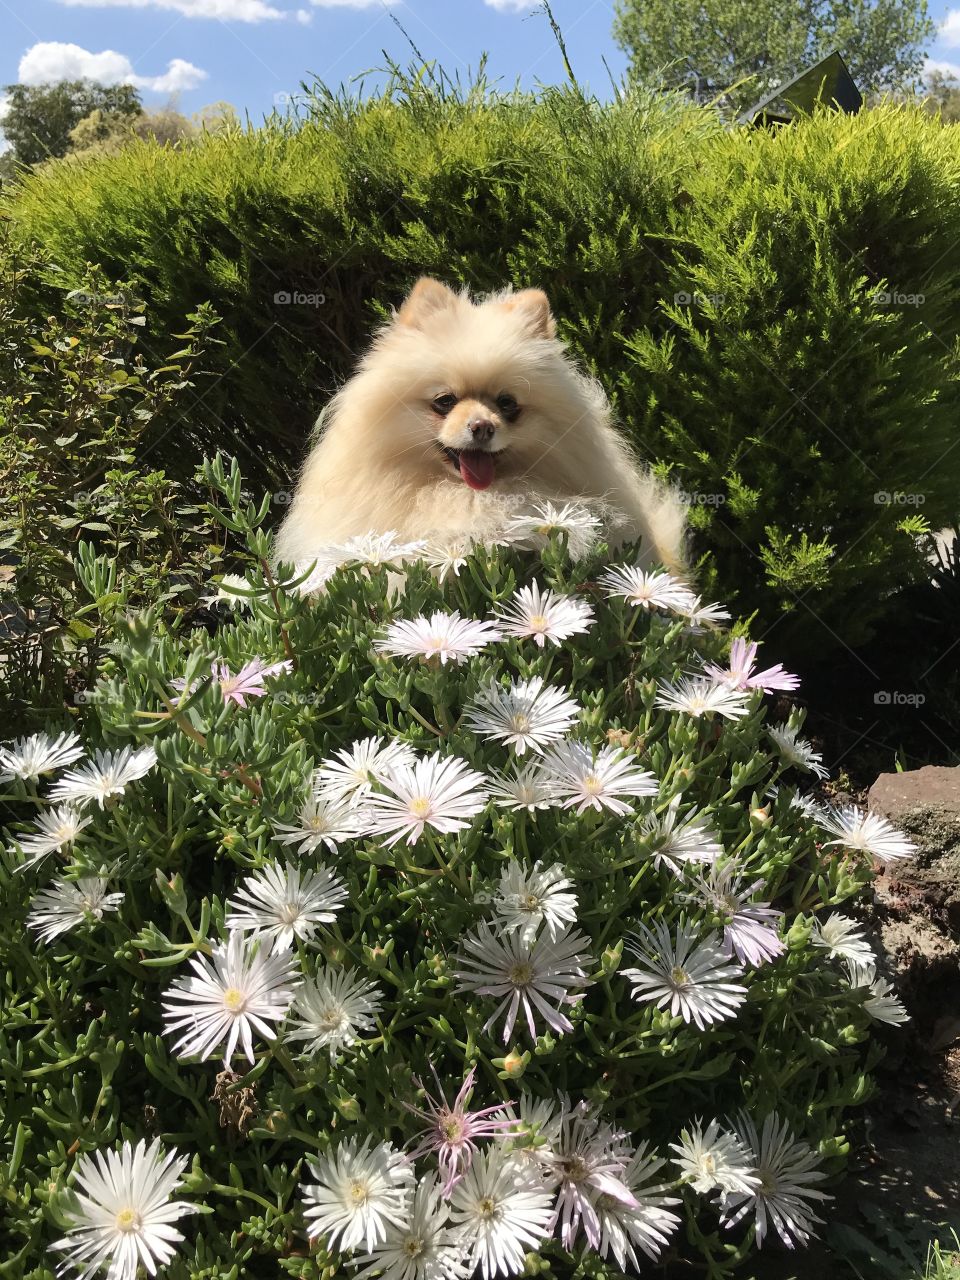 Cute Pomerania Daisy with her flower daisy-like white heads in Cheltenham Melbourne Australia 